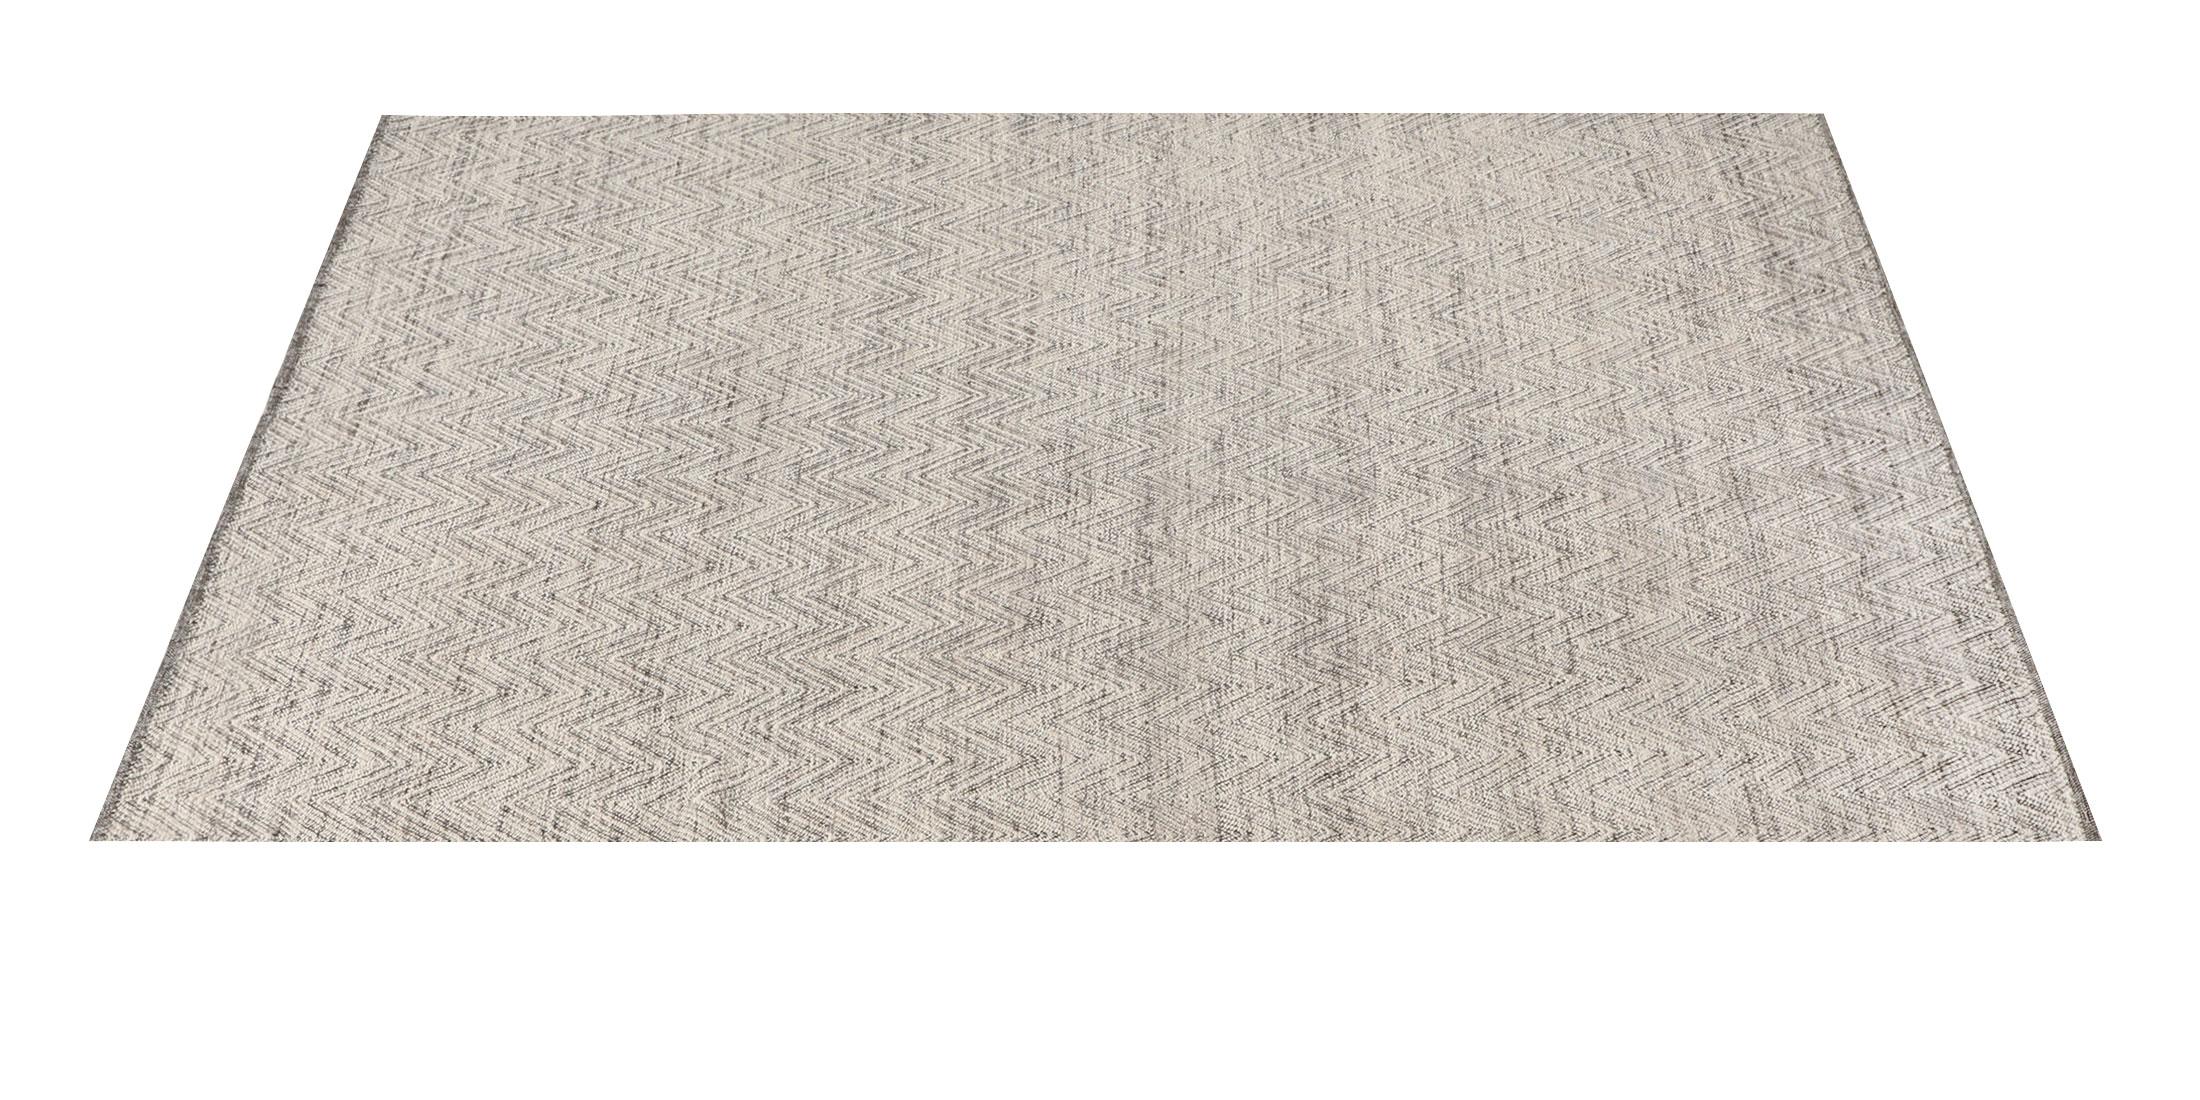 For Sale: Silver Ben Soleimani Ceyah Rug– Hand-woven Plush Textured Wool + Linen Charcoal 12'x15' 2